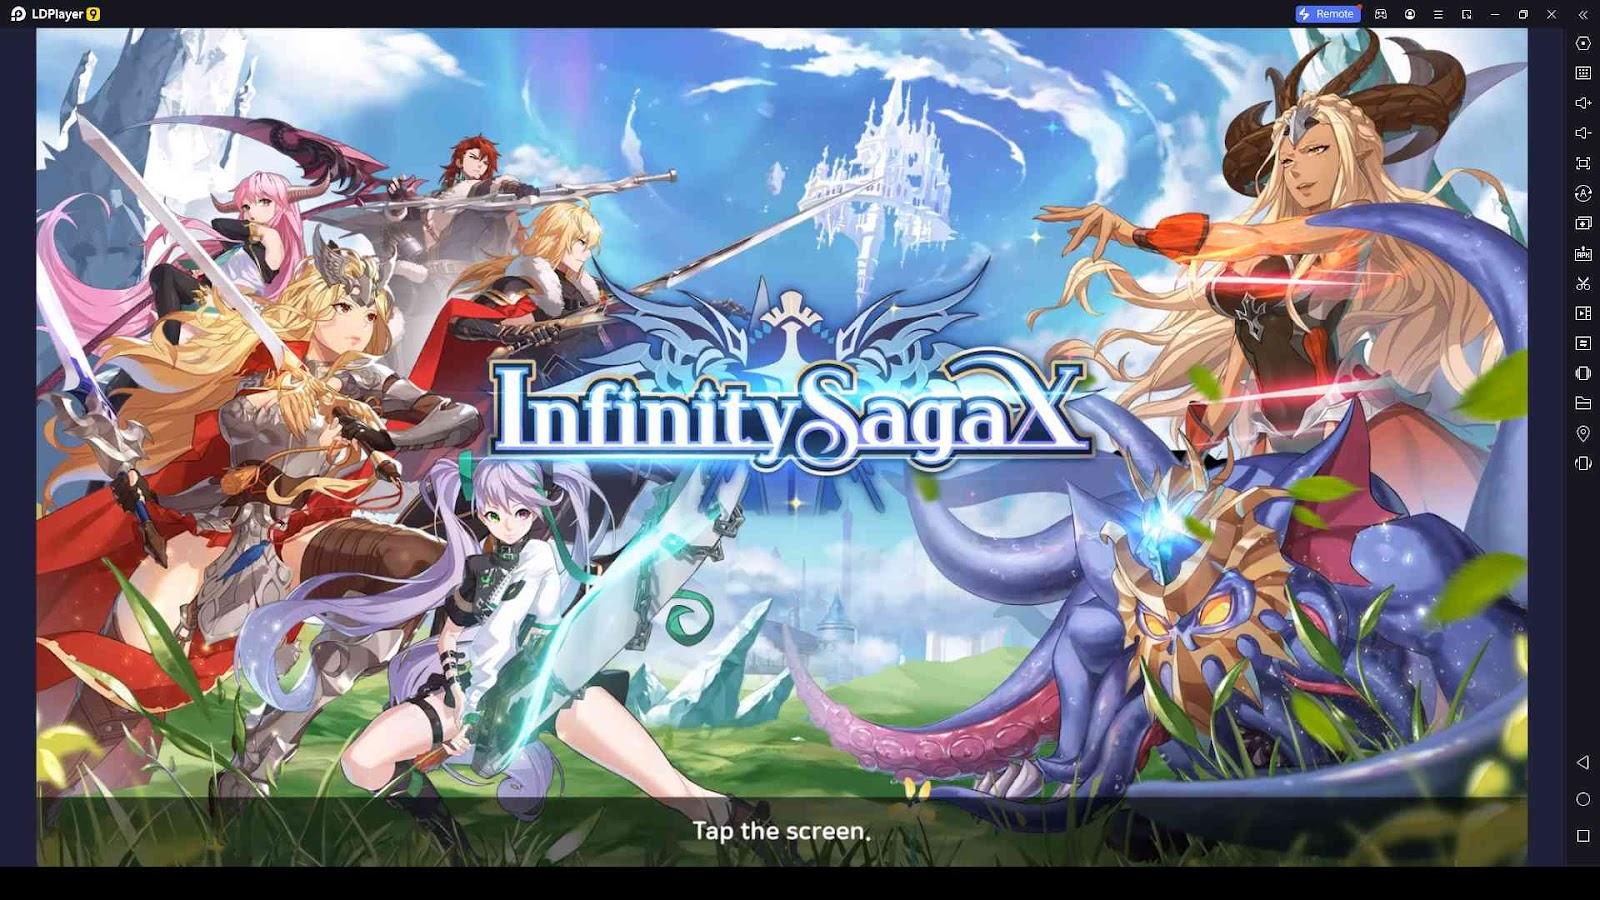 Beginner’s Guide to Infinity Saga X